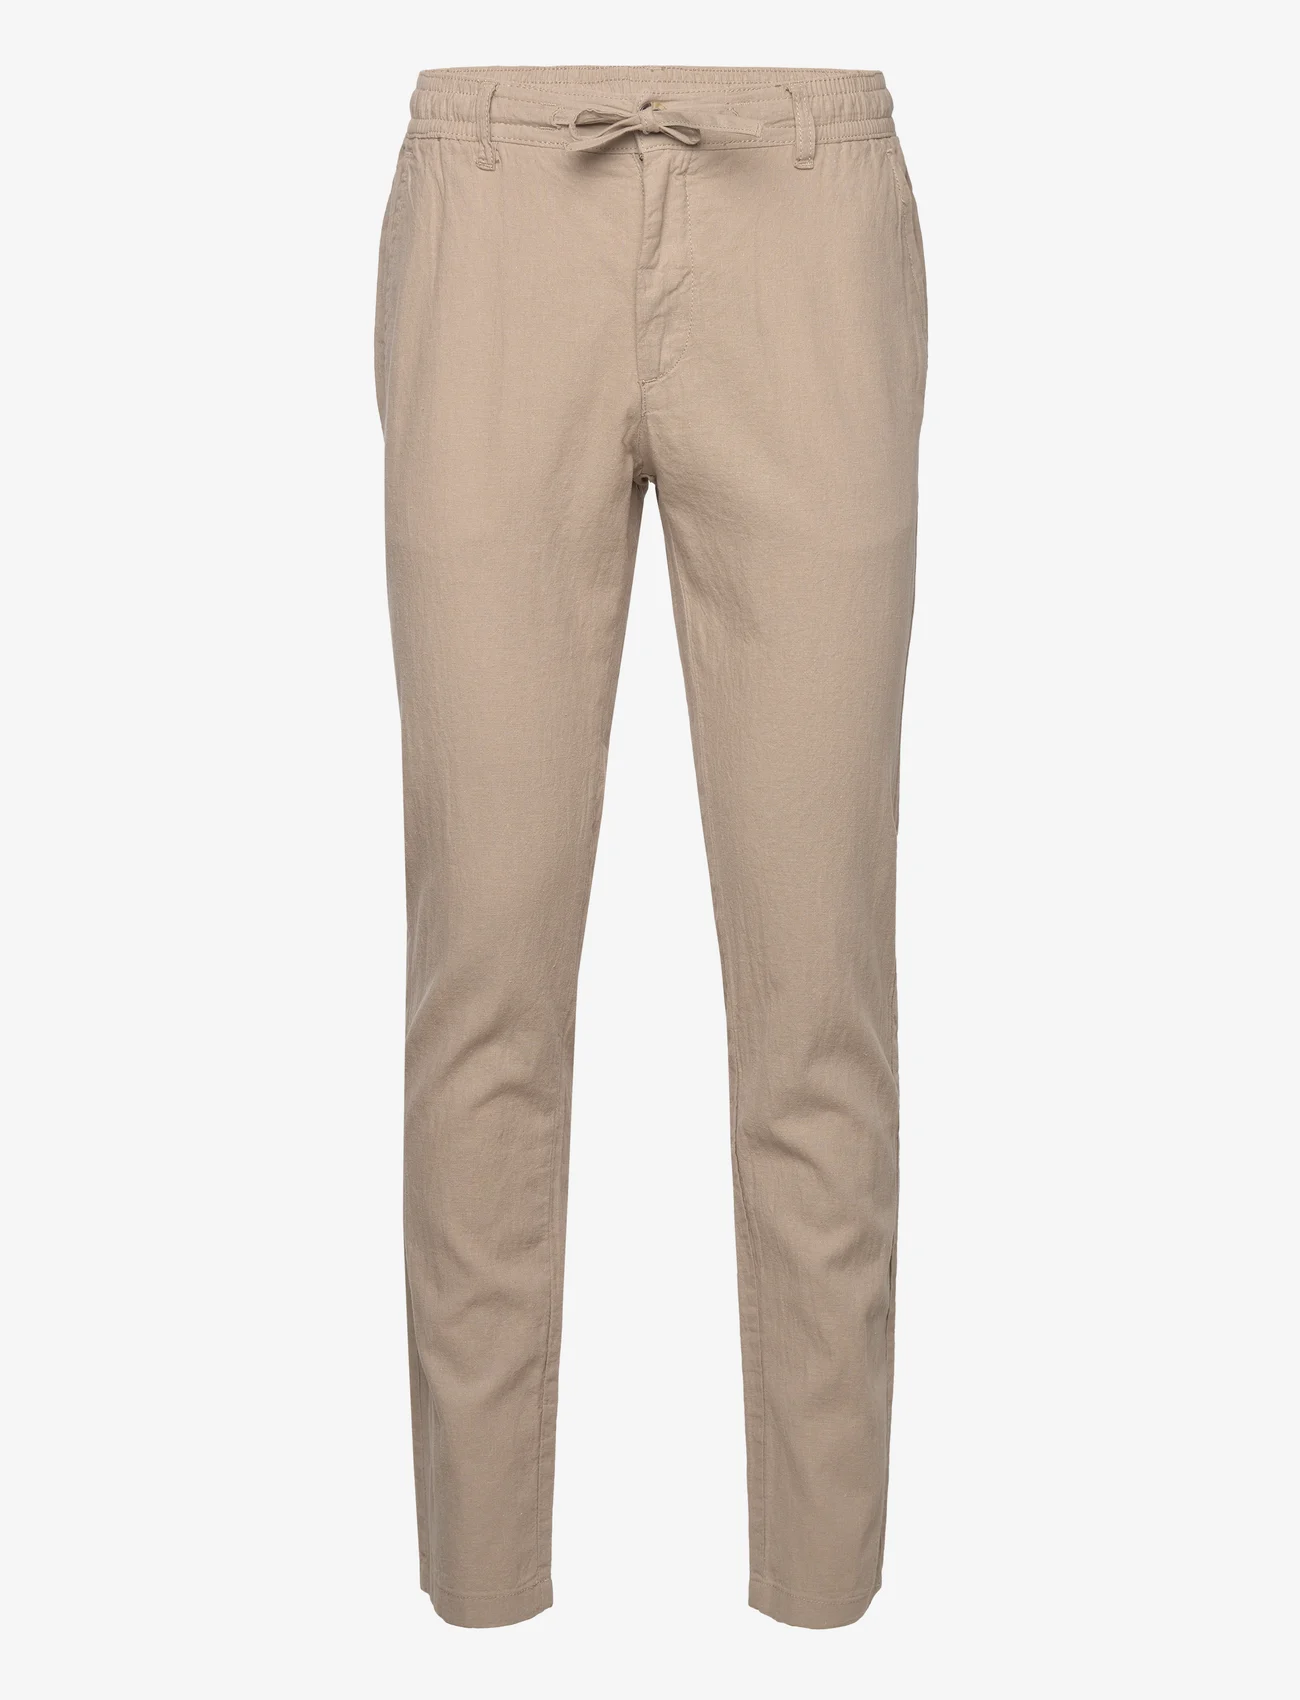 Lindbergh - Linen pants - pellavahousut - sand - 0